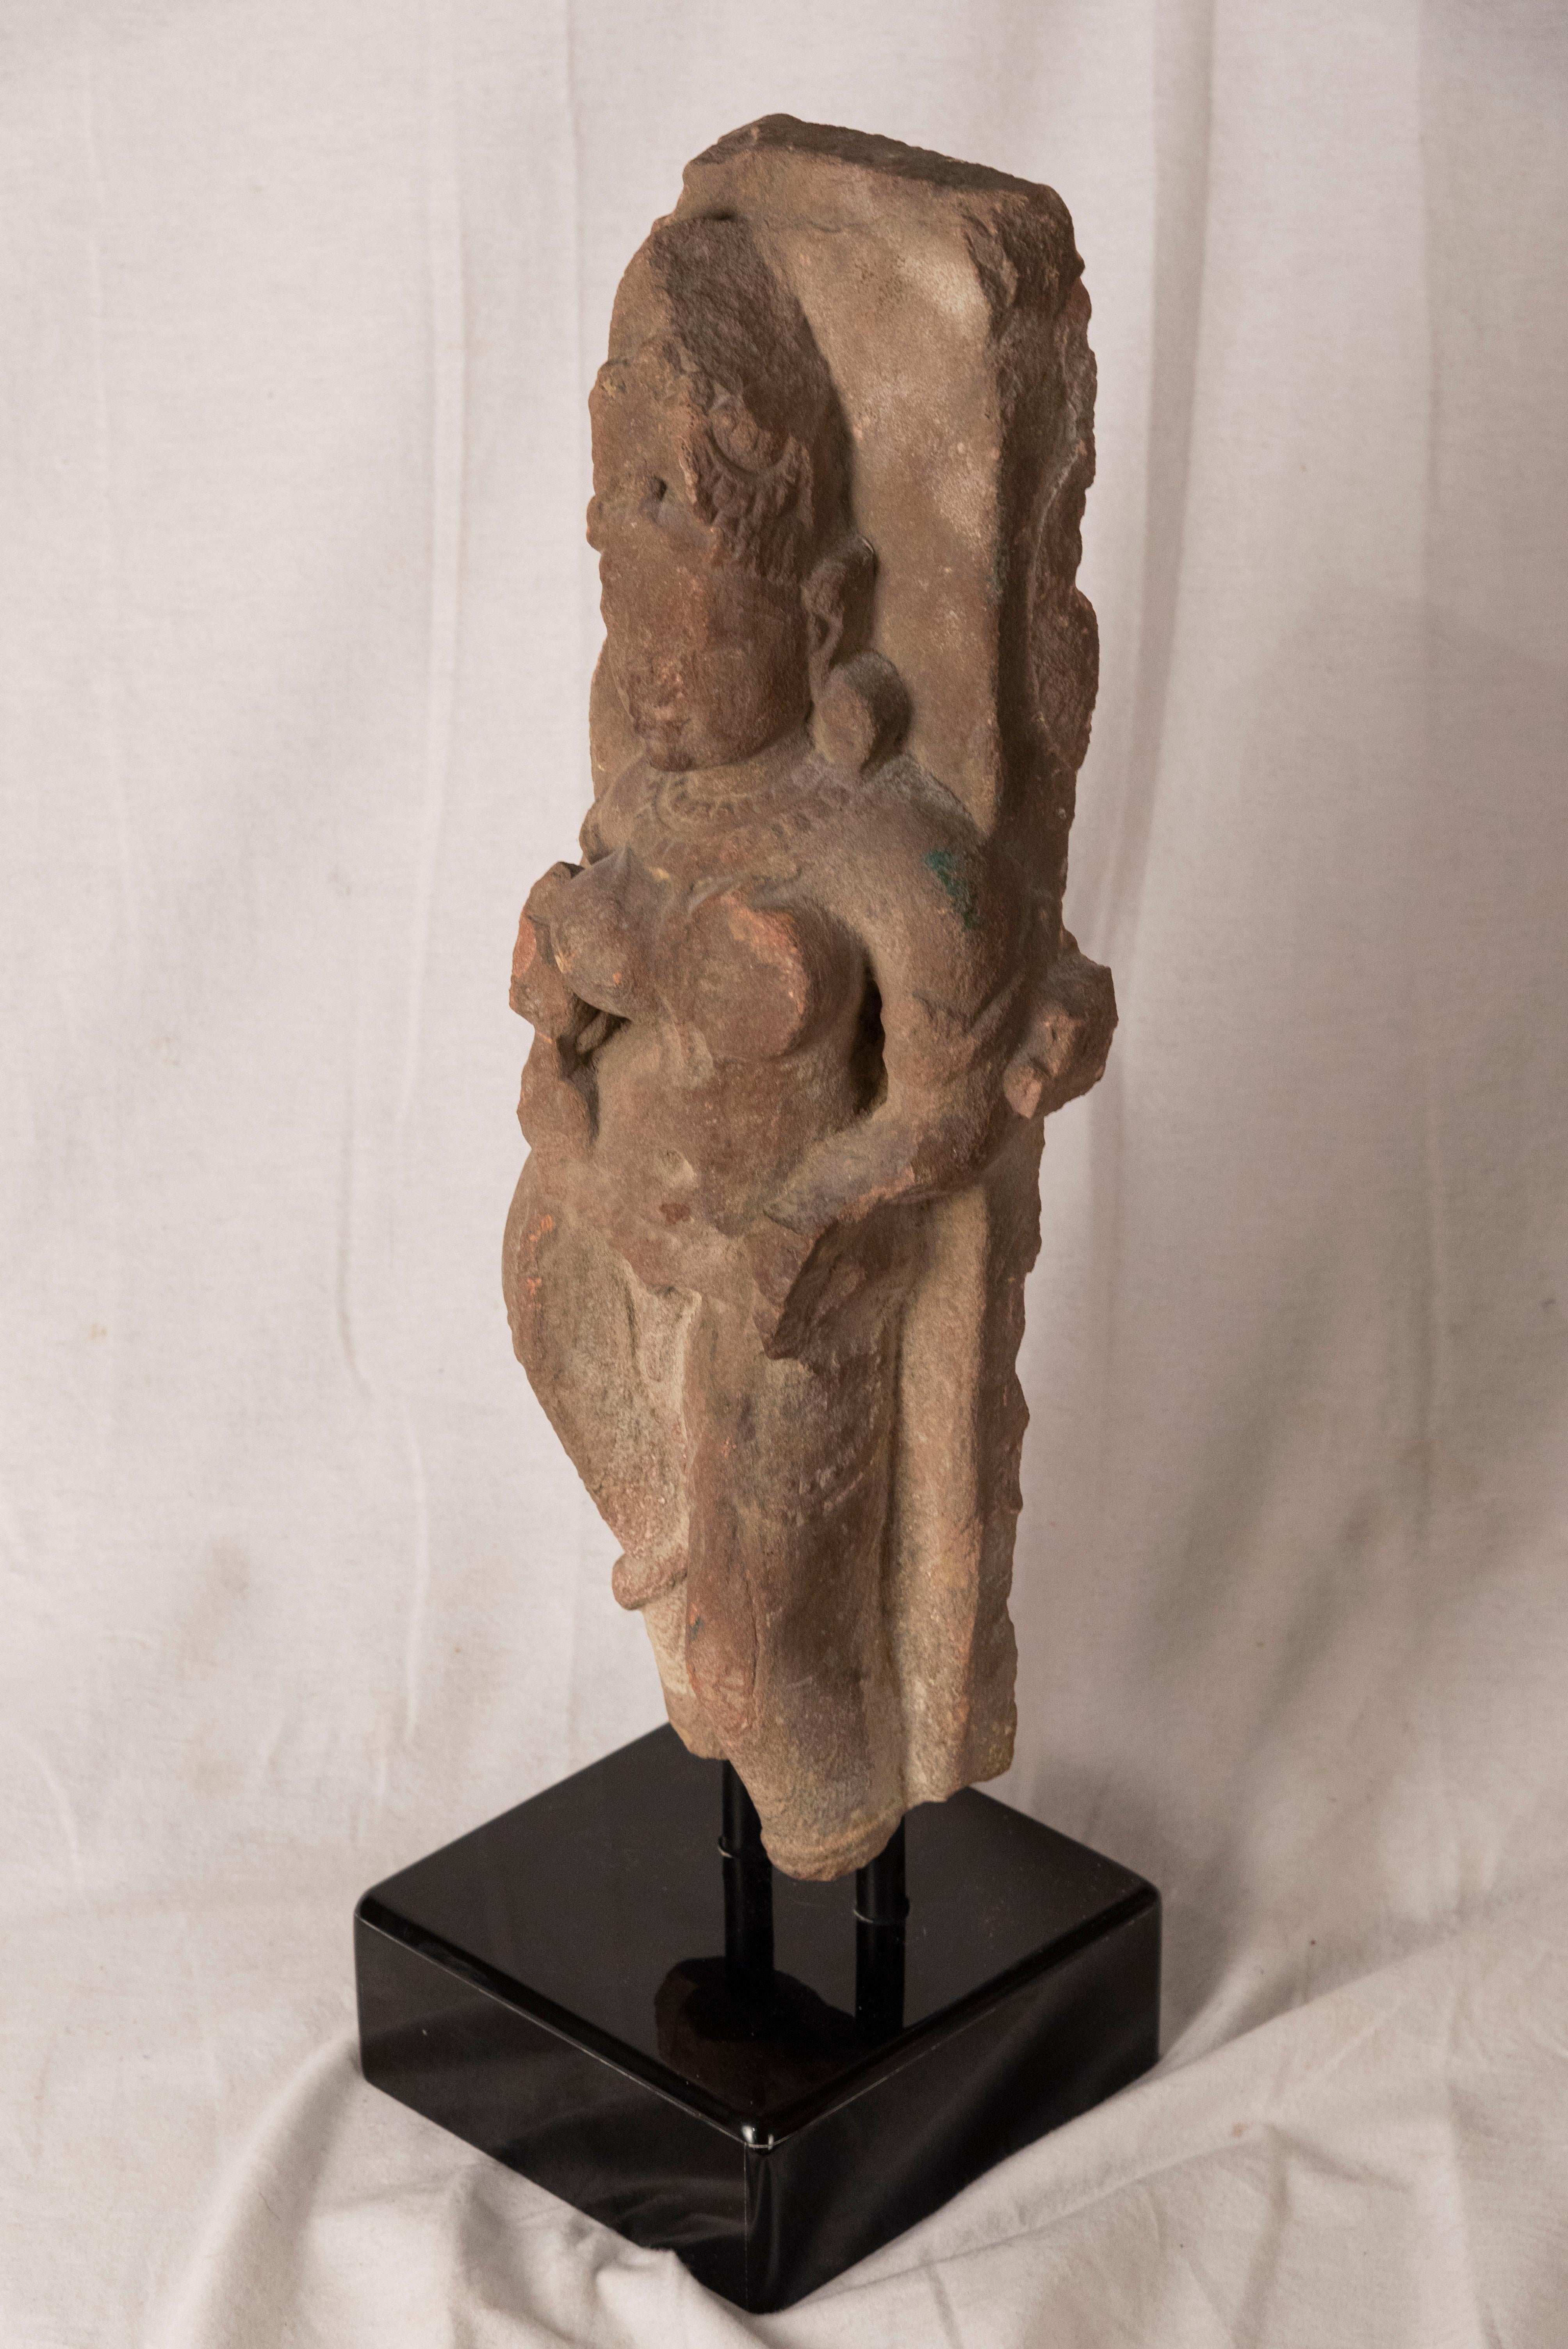 Stone Hindu Deity Figure Carved in Basalt, 'circa 1850', India